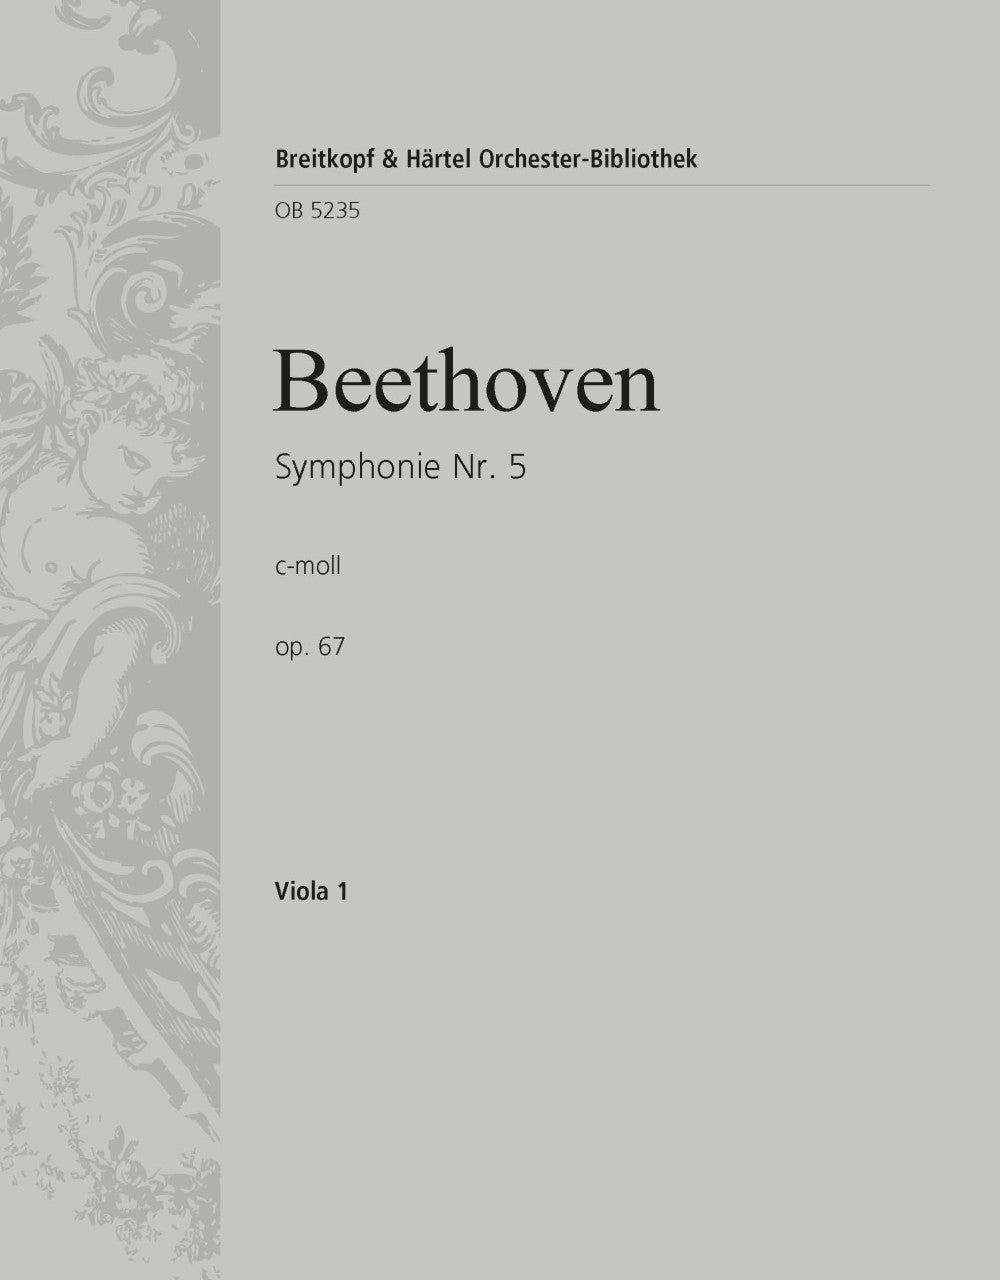 Beethoven: Symphony No. 5 in C Minor, Op. 67 - Ficks Music